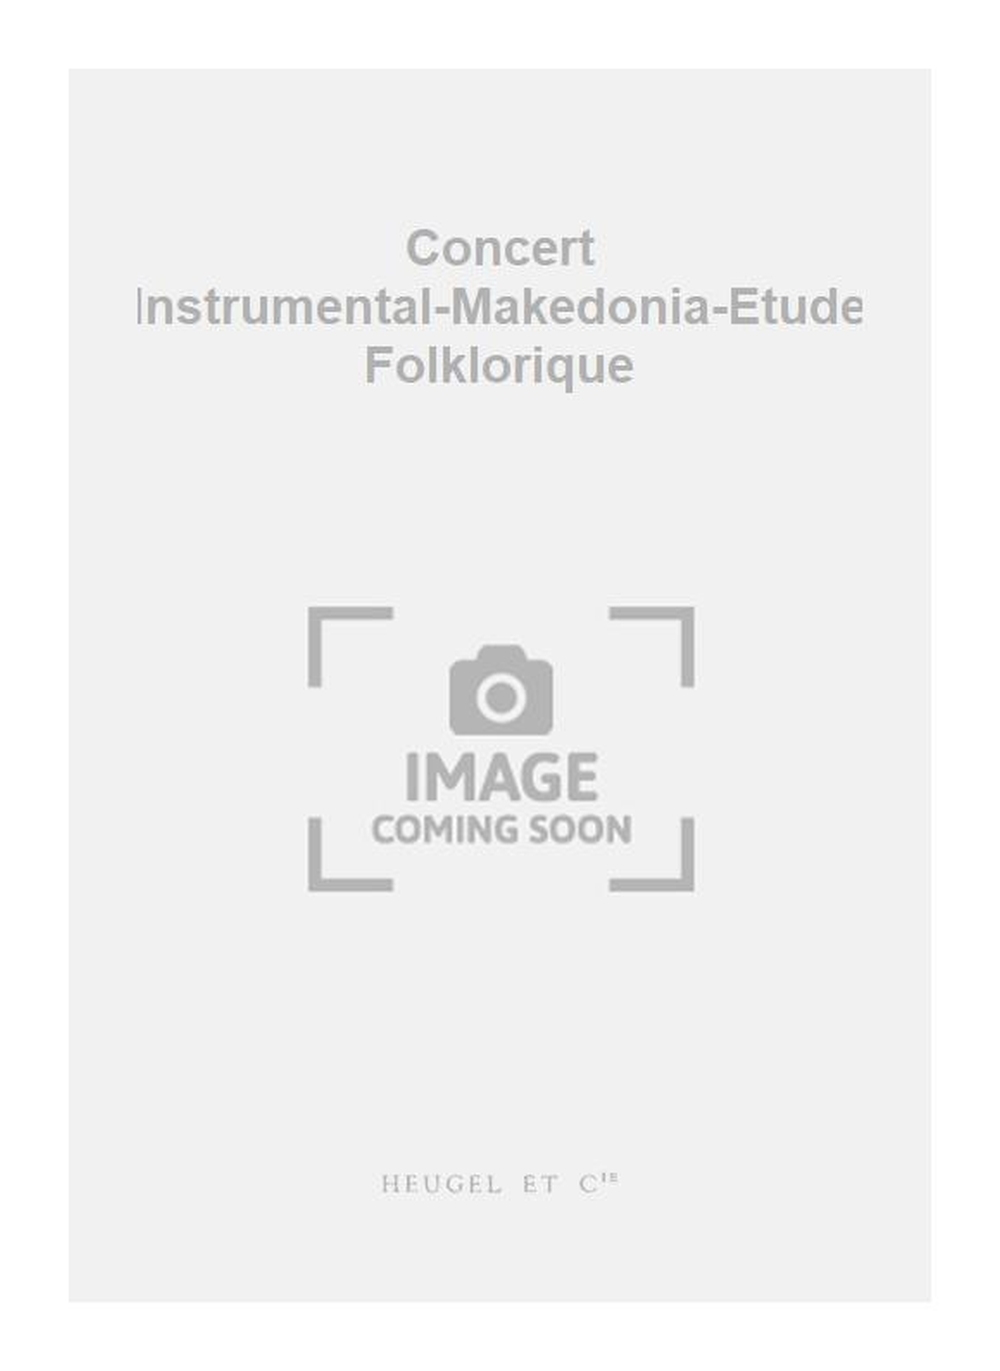 Janko Nilovic: Concert Instrumental-Makedonia-Etude Folklorique